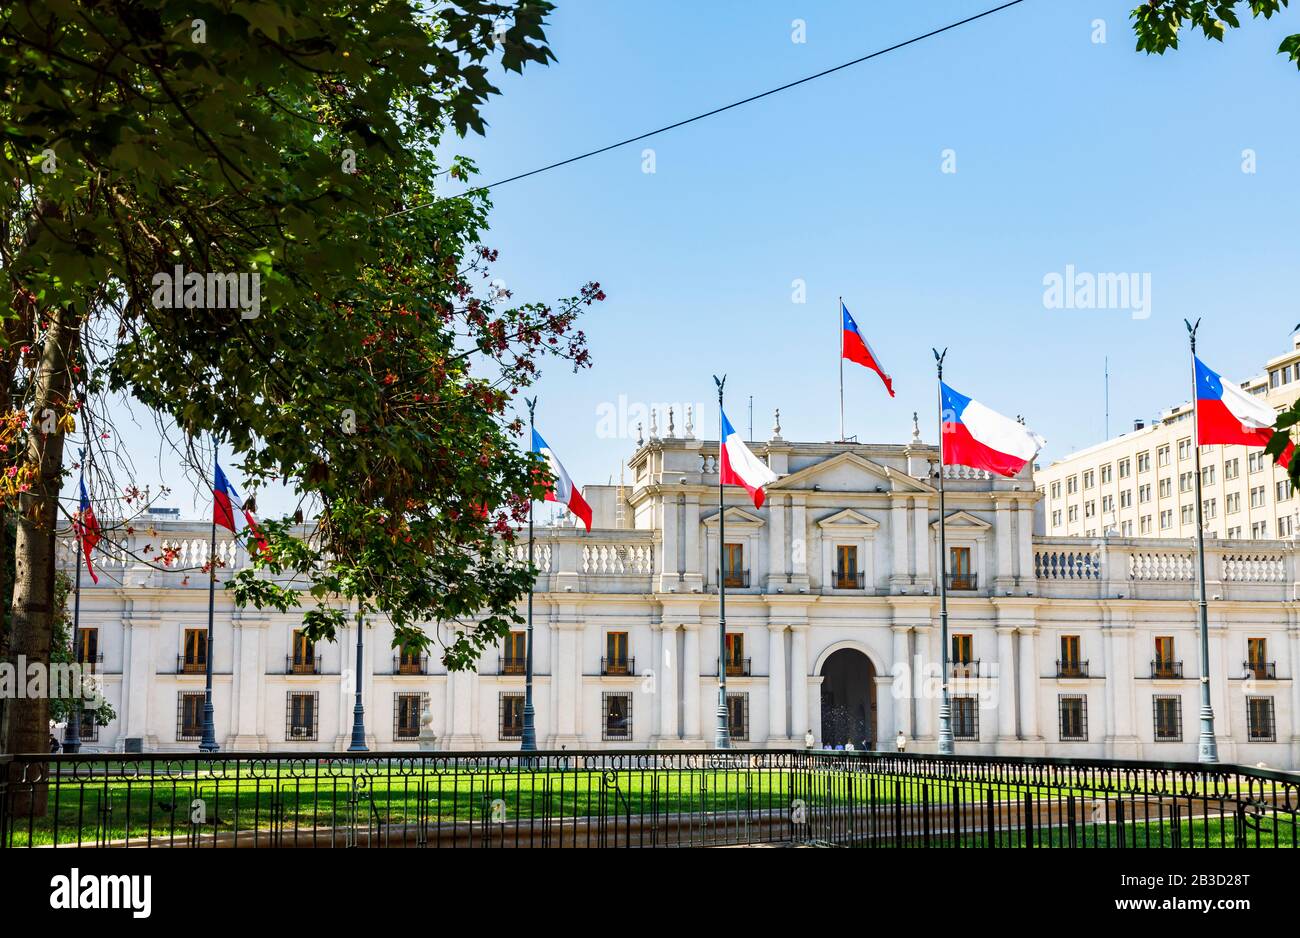 Fassade des neoklassizistischen Palacio de La Moneda oder des La-Moneda-Palastes, Sitz des Präsidenten der Republik Chile, Santiago, Hauptstadt Chiles Stockfoto